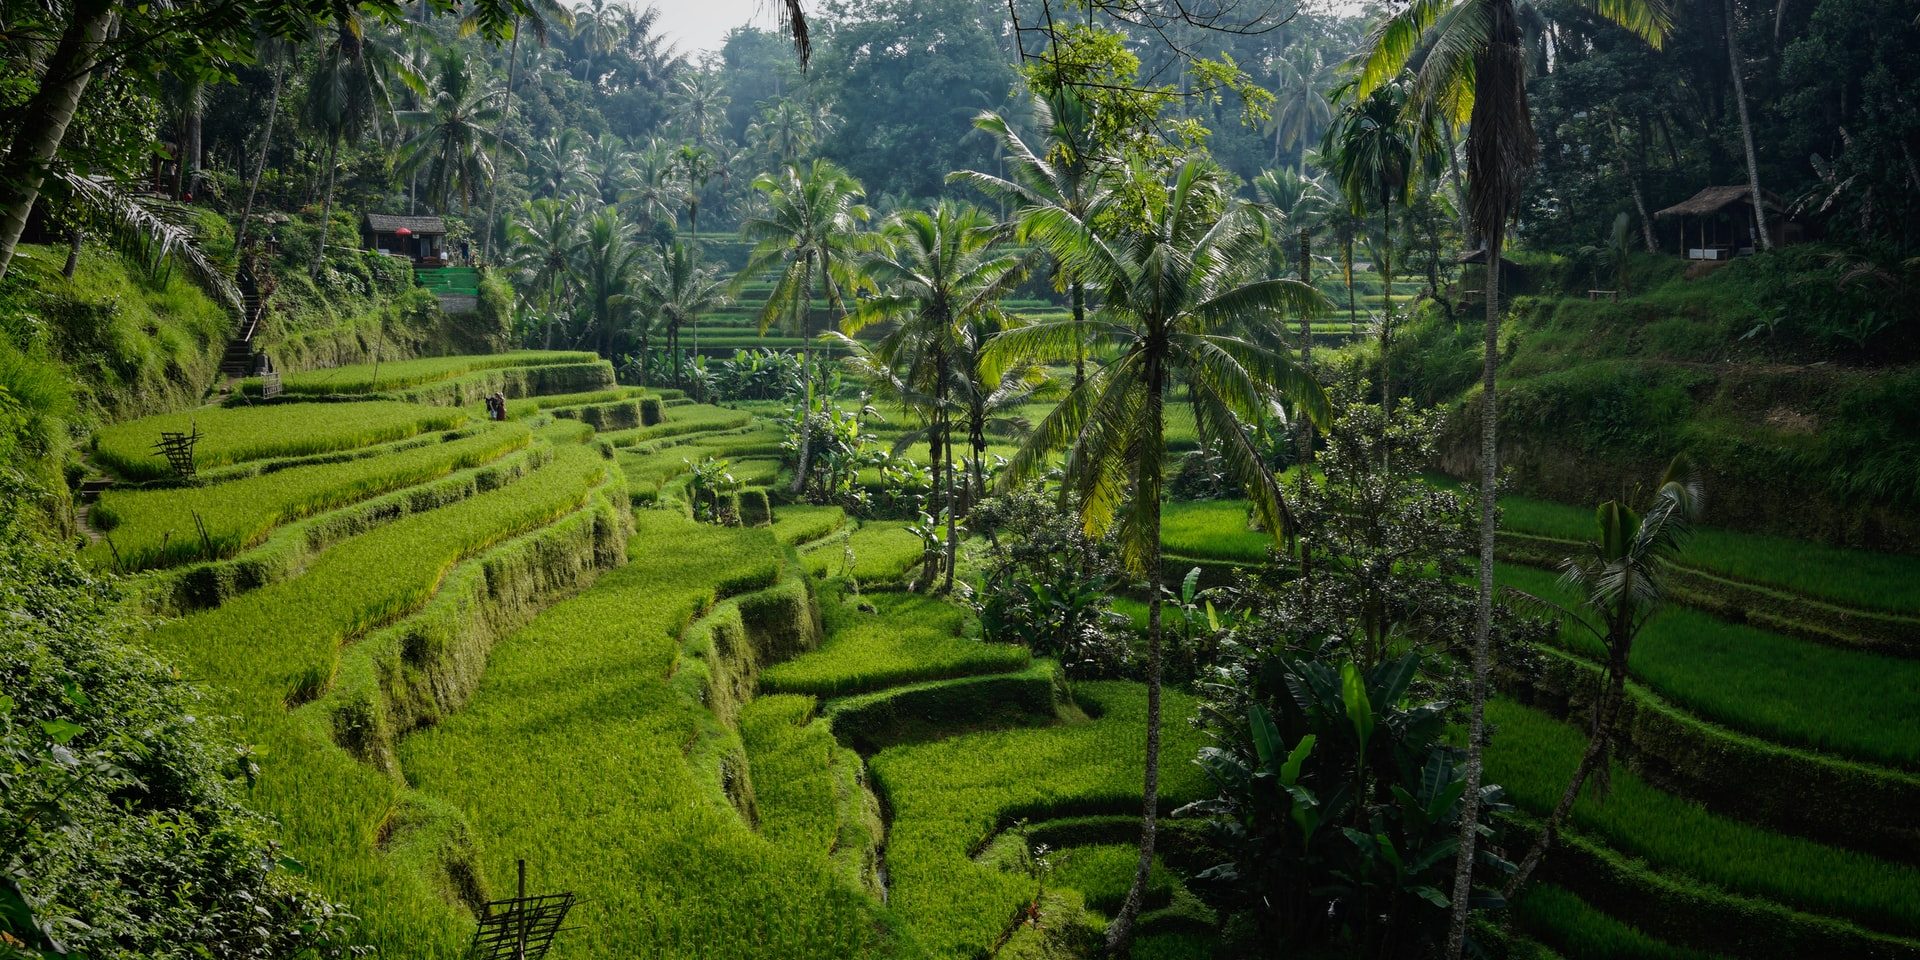 Tegelalang rice terraces north of Ubud, Tegelalang, Bali